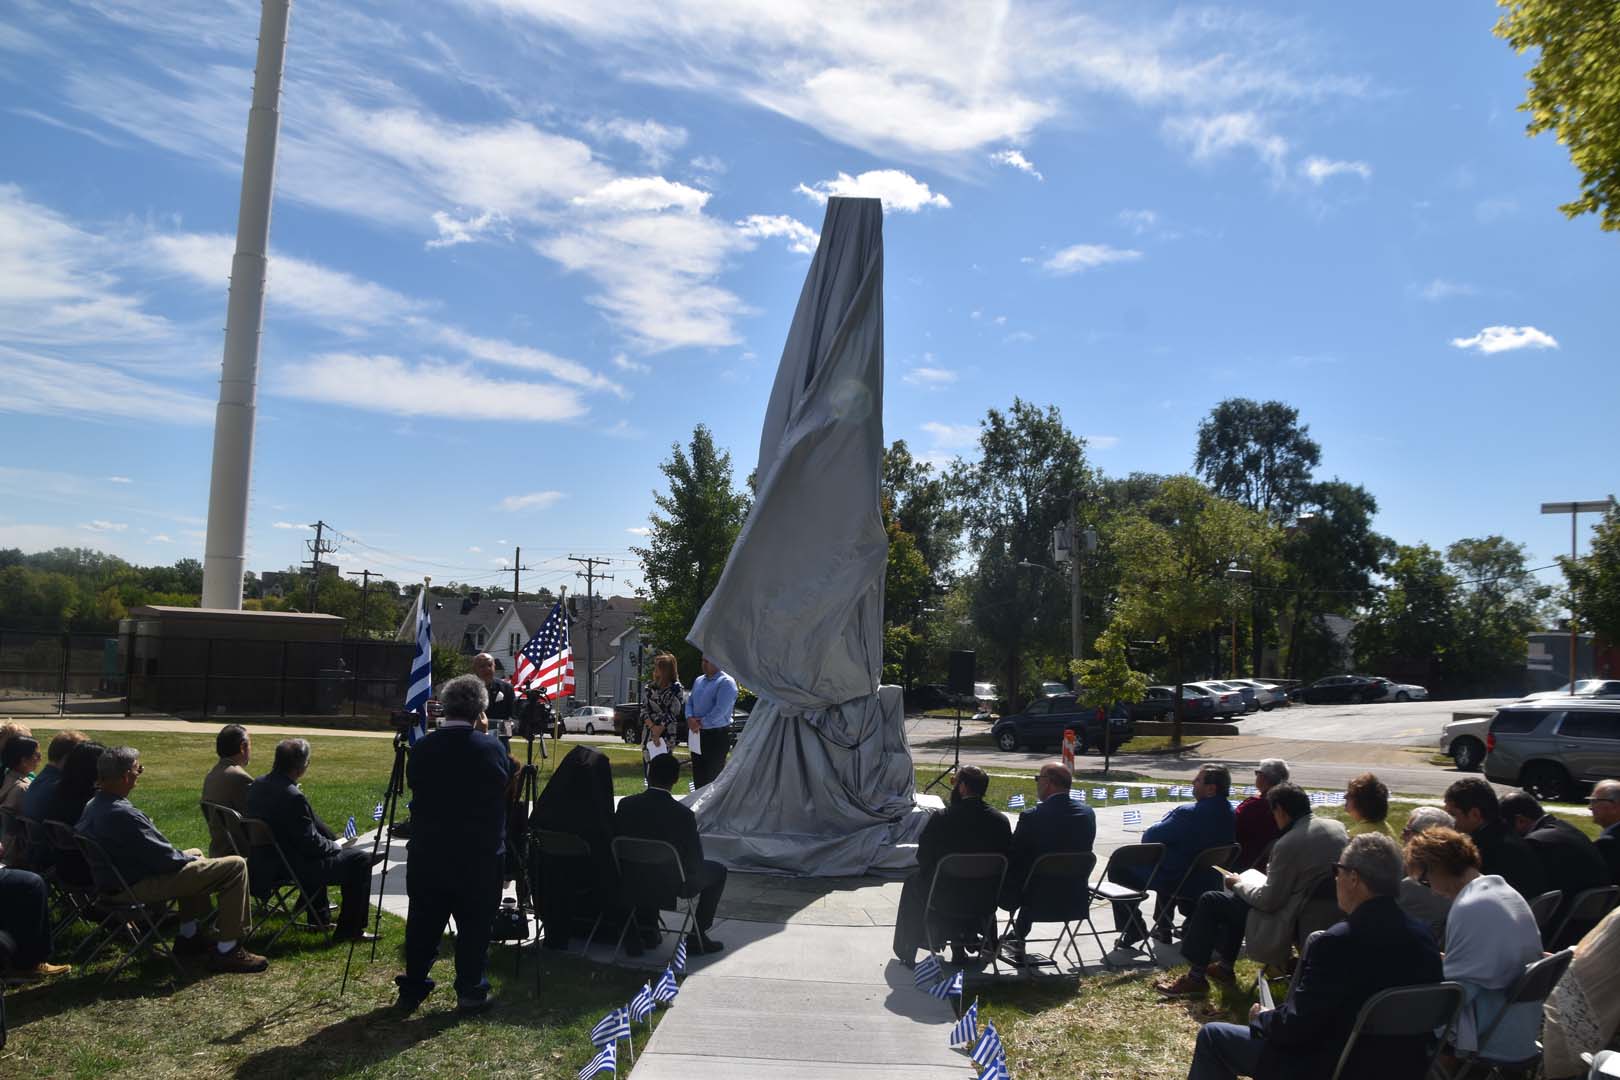 September 25th 2021 monument unveiled in Aurora Illinois - Philhellenes Monument before unveiling